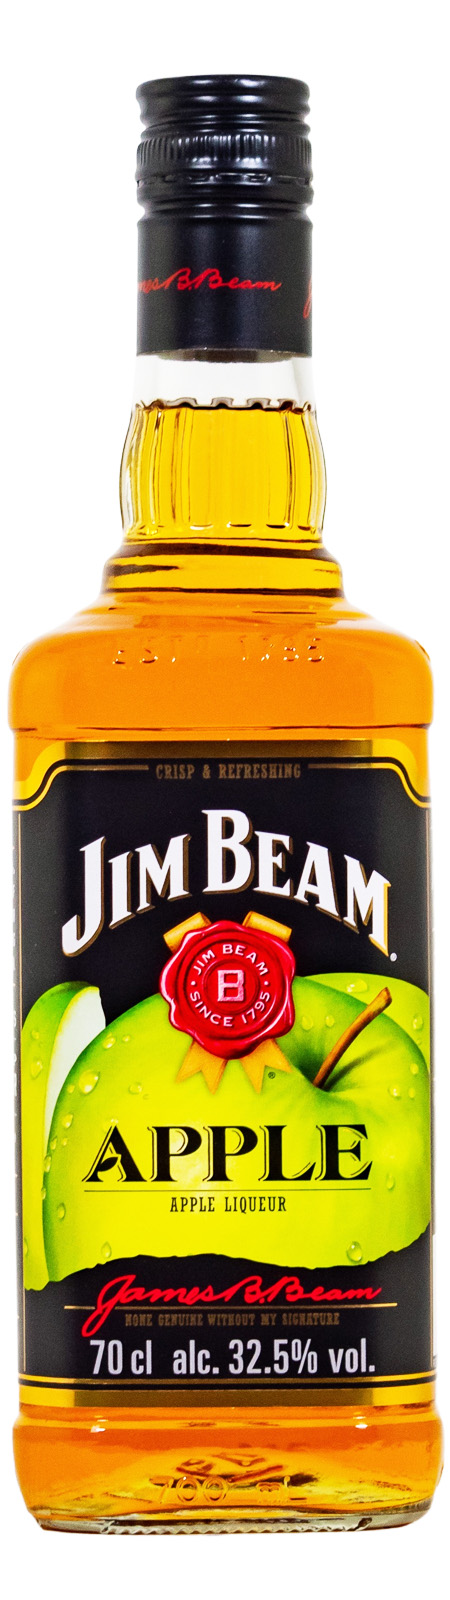 Apple Whiskeylikör kaufen Jim günstig Beam